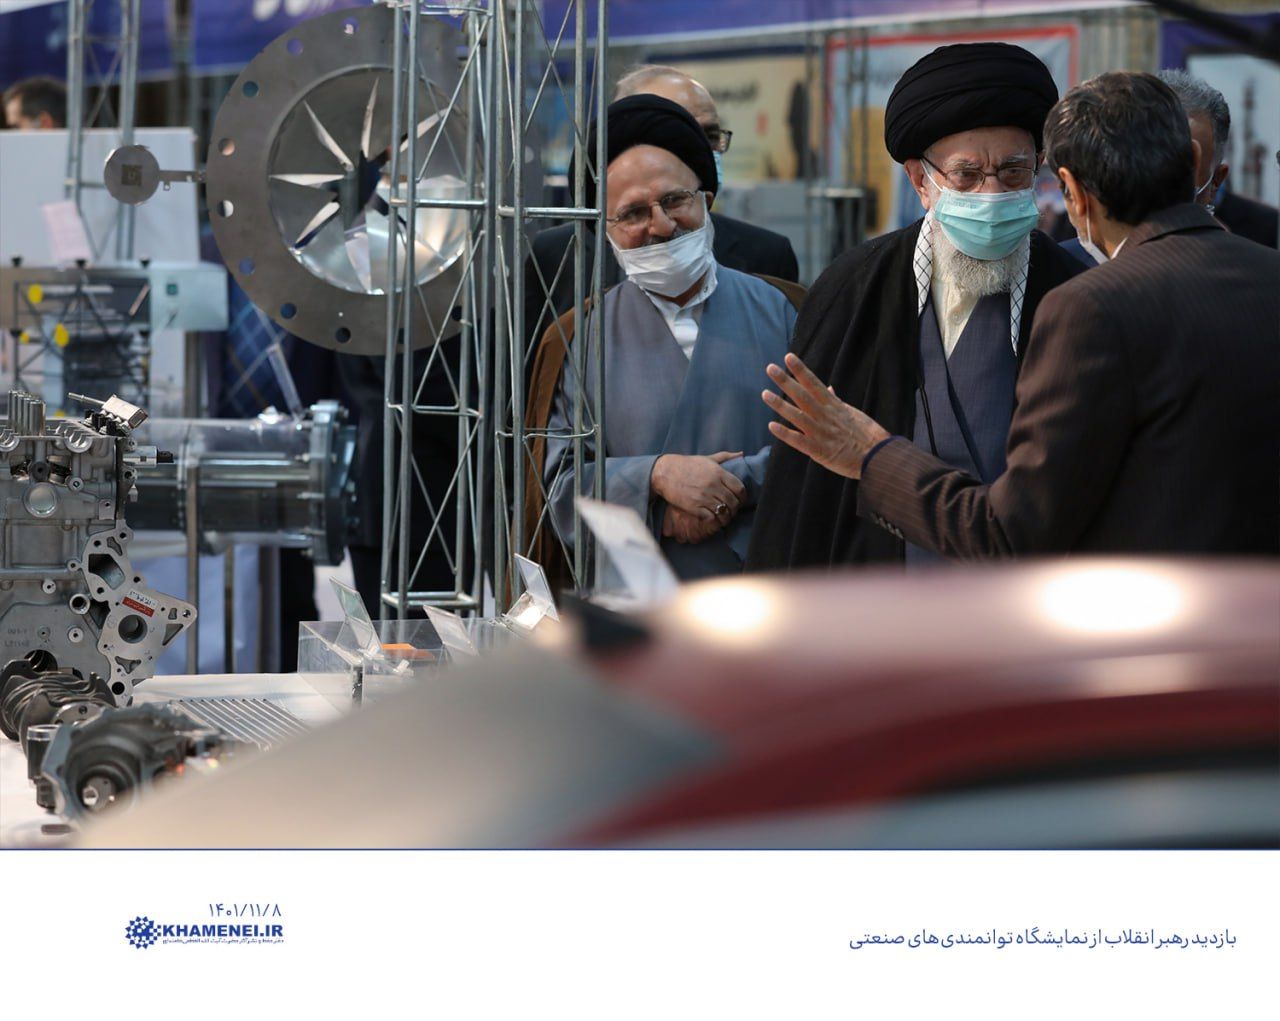 The Leader of the Islamic Revolution His Eminence Imam Sayyed Ali Khamenei, inspects the Industrial Capabilities Exhibition in Imam Khomeini’s Hossainiya in Tehran